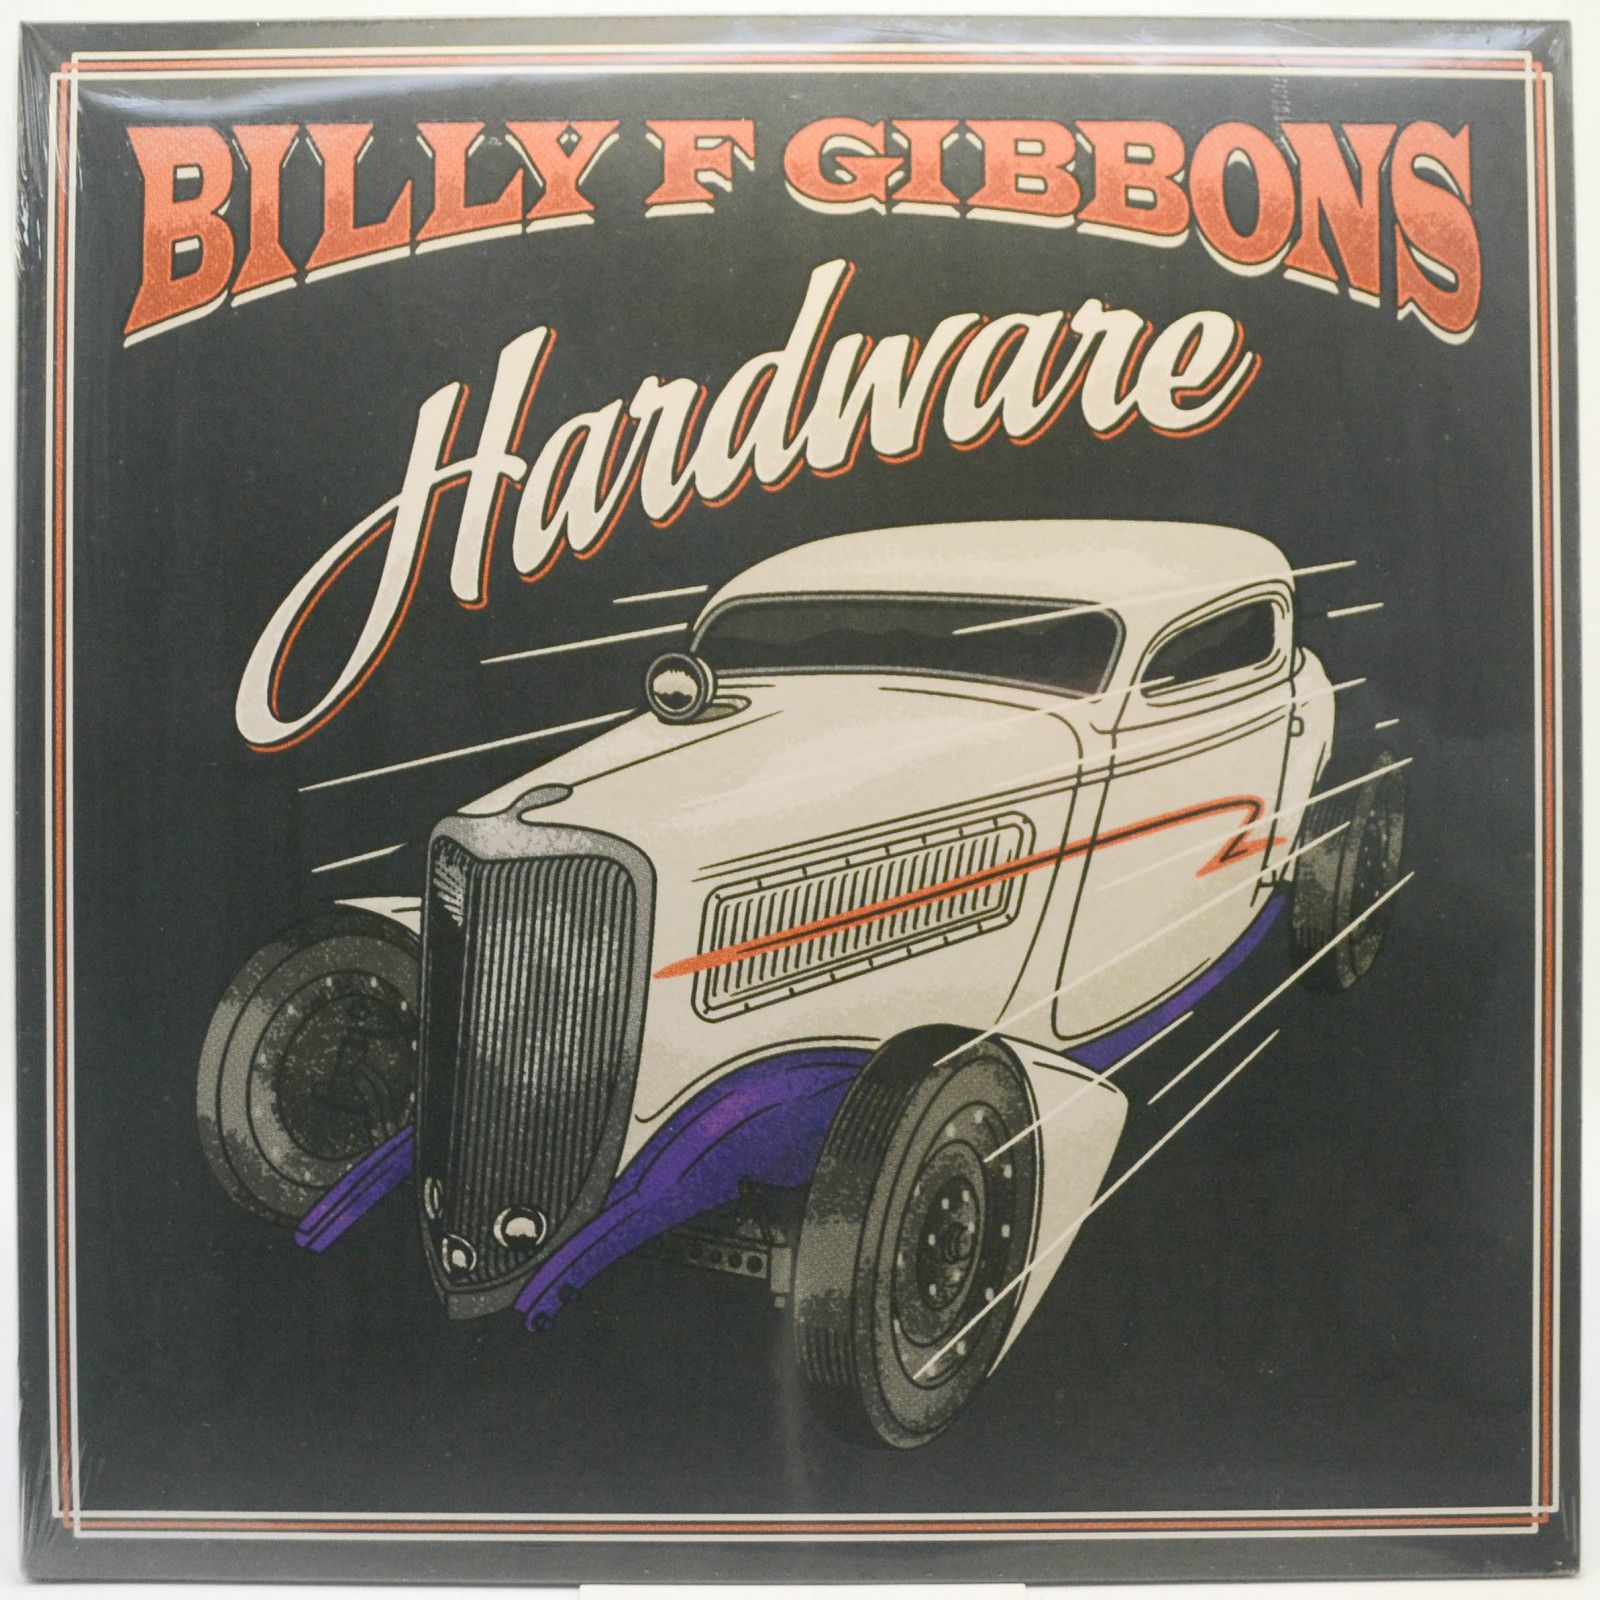 Billy F Gibbons — Hardware, 2021